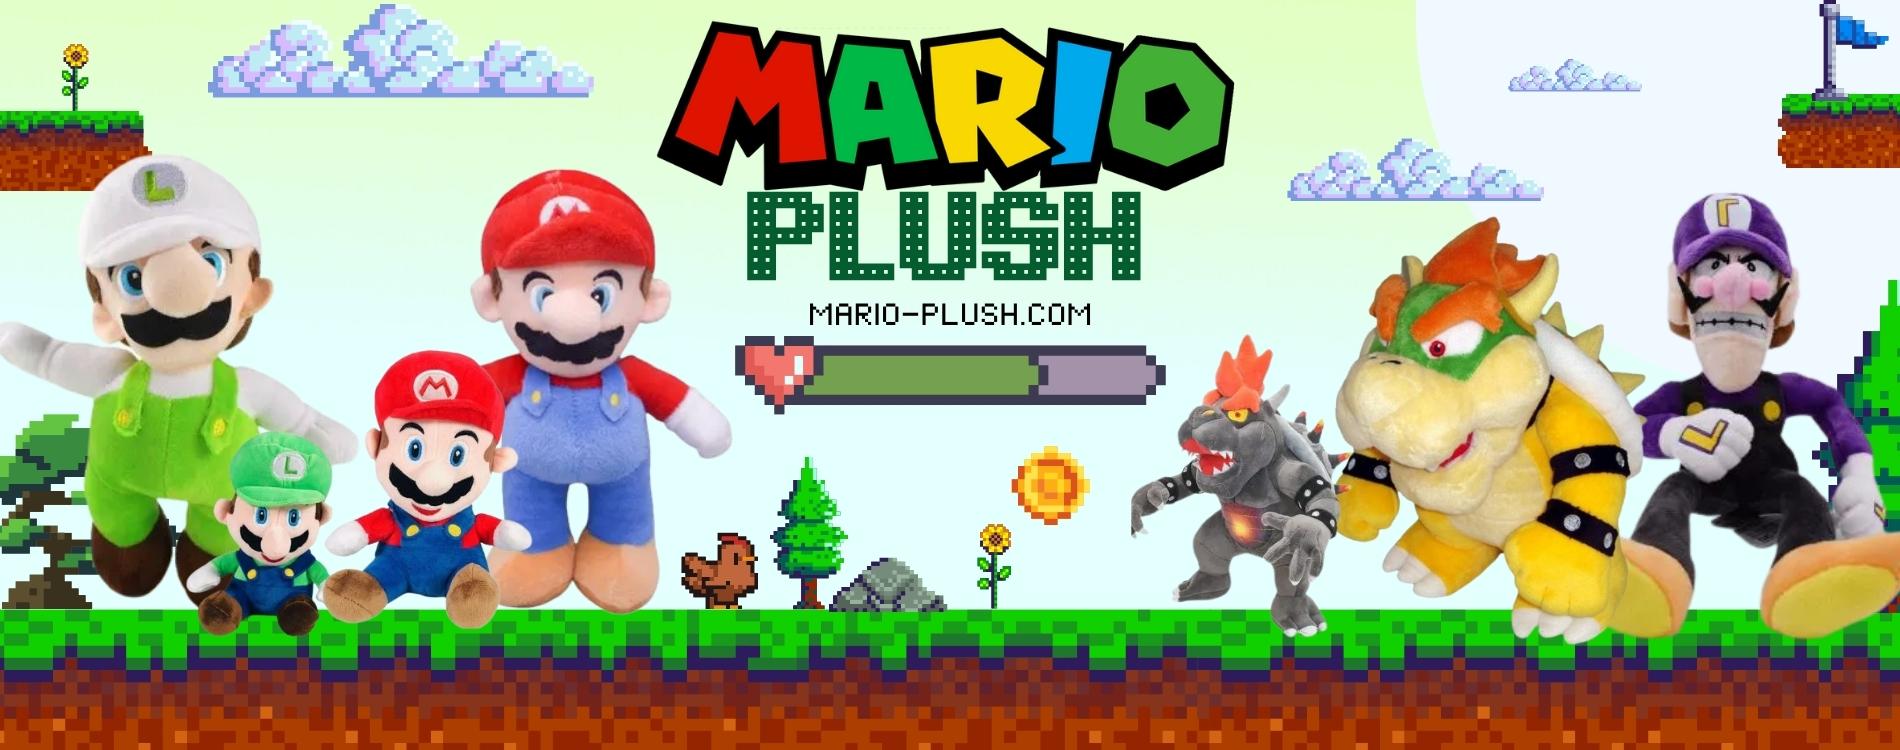 Mario plush banner 2